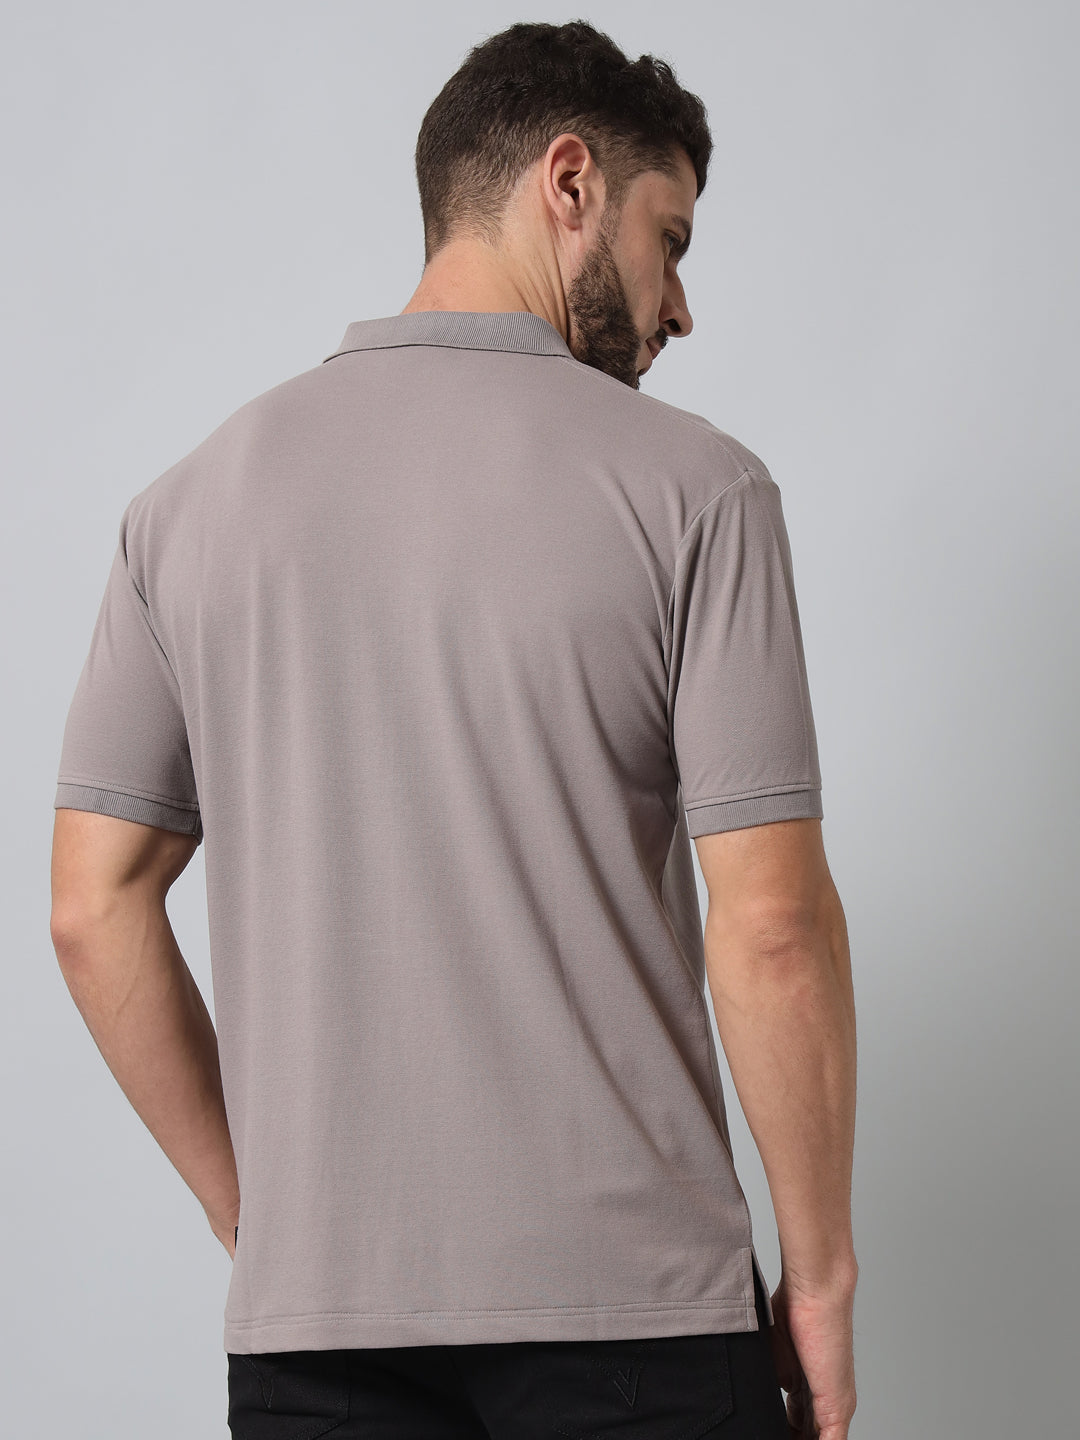 GRIFFEL Men's Steel Grey Cotton Polo T-shirt